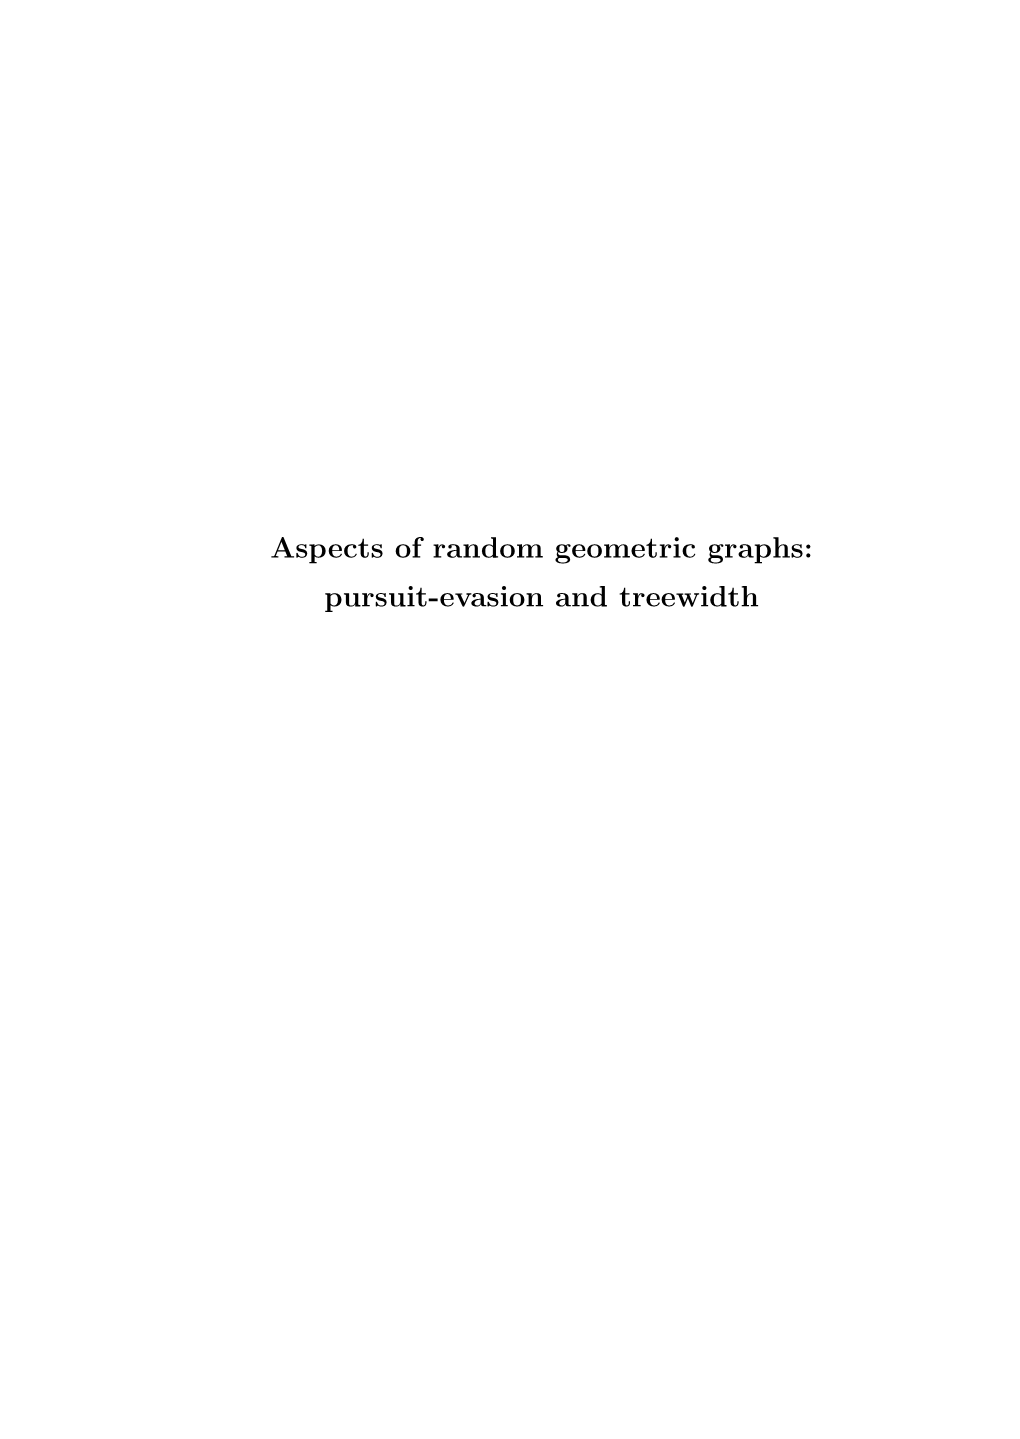 Aspects of Random Geometric Graphs: Pursuit-Evasion and Treewidth